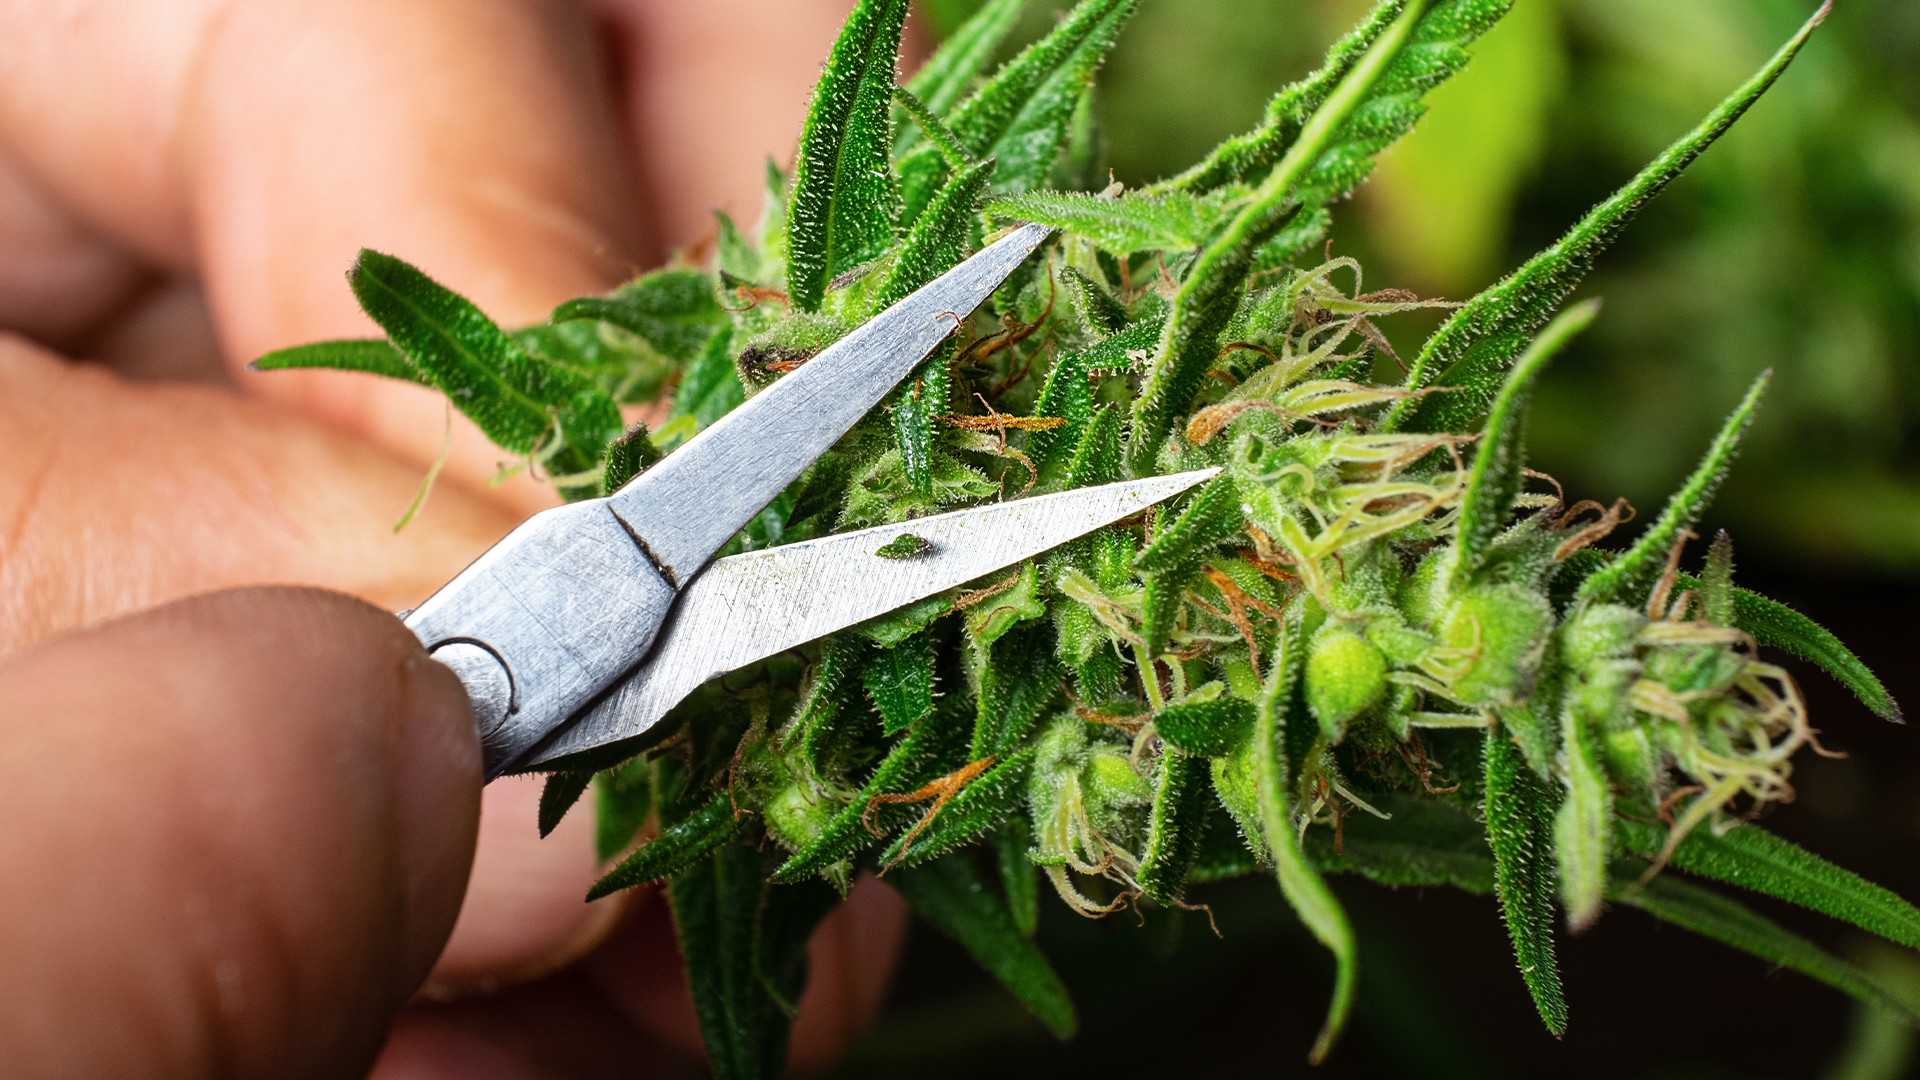 How to Trim Cannabis